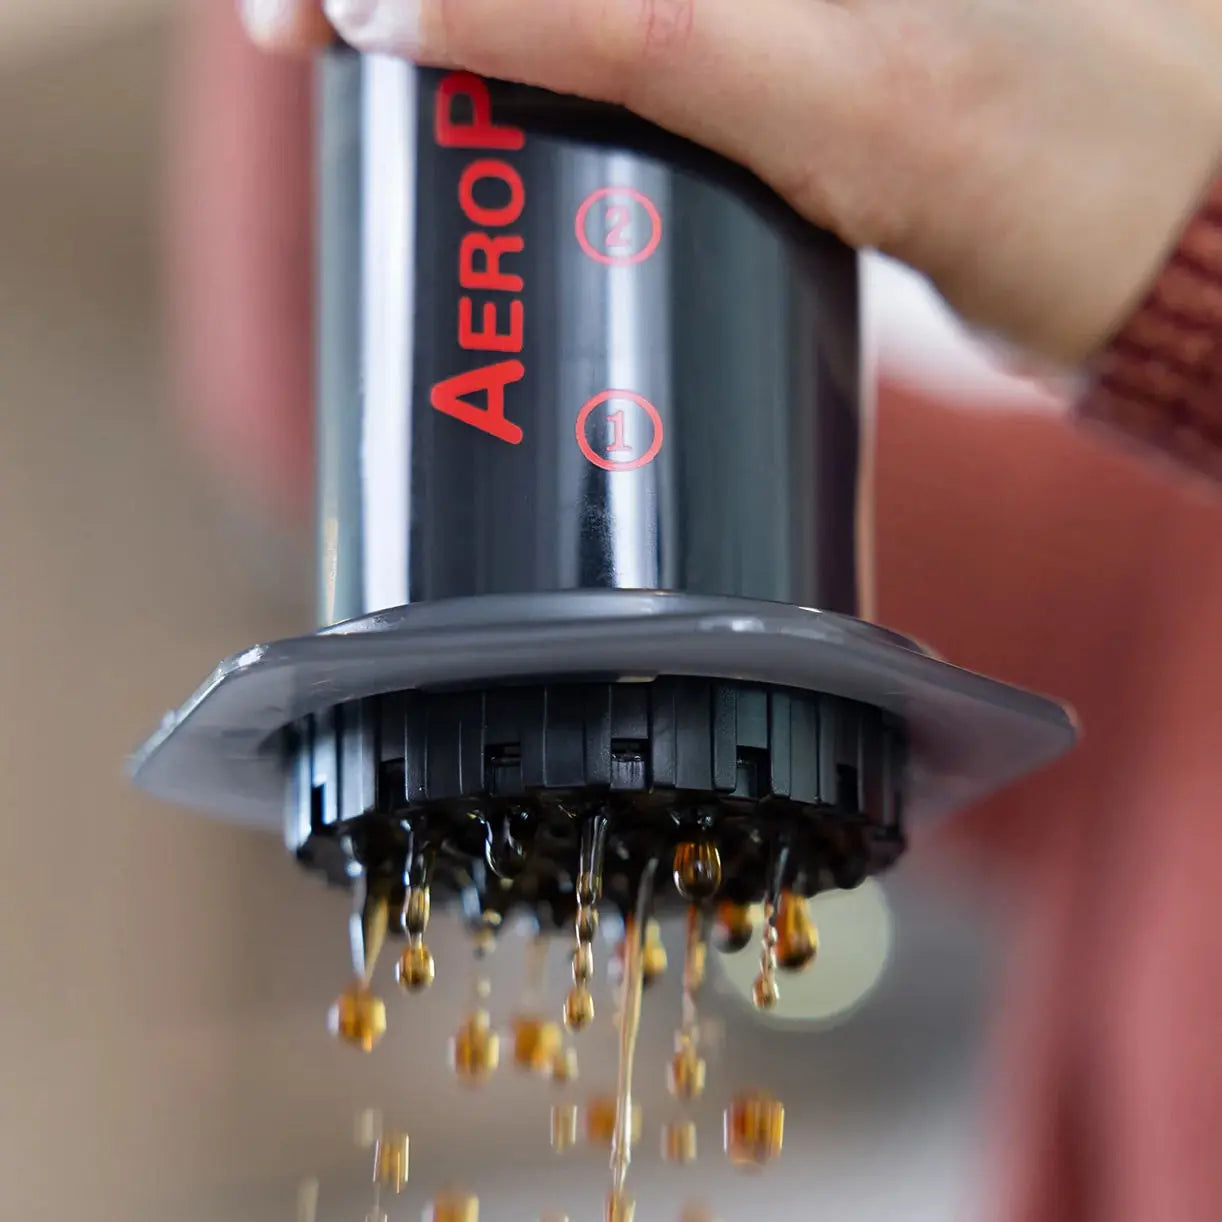 AEROPRESS | ORIGINAL COFFEE MAKER